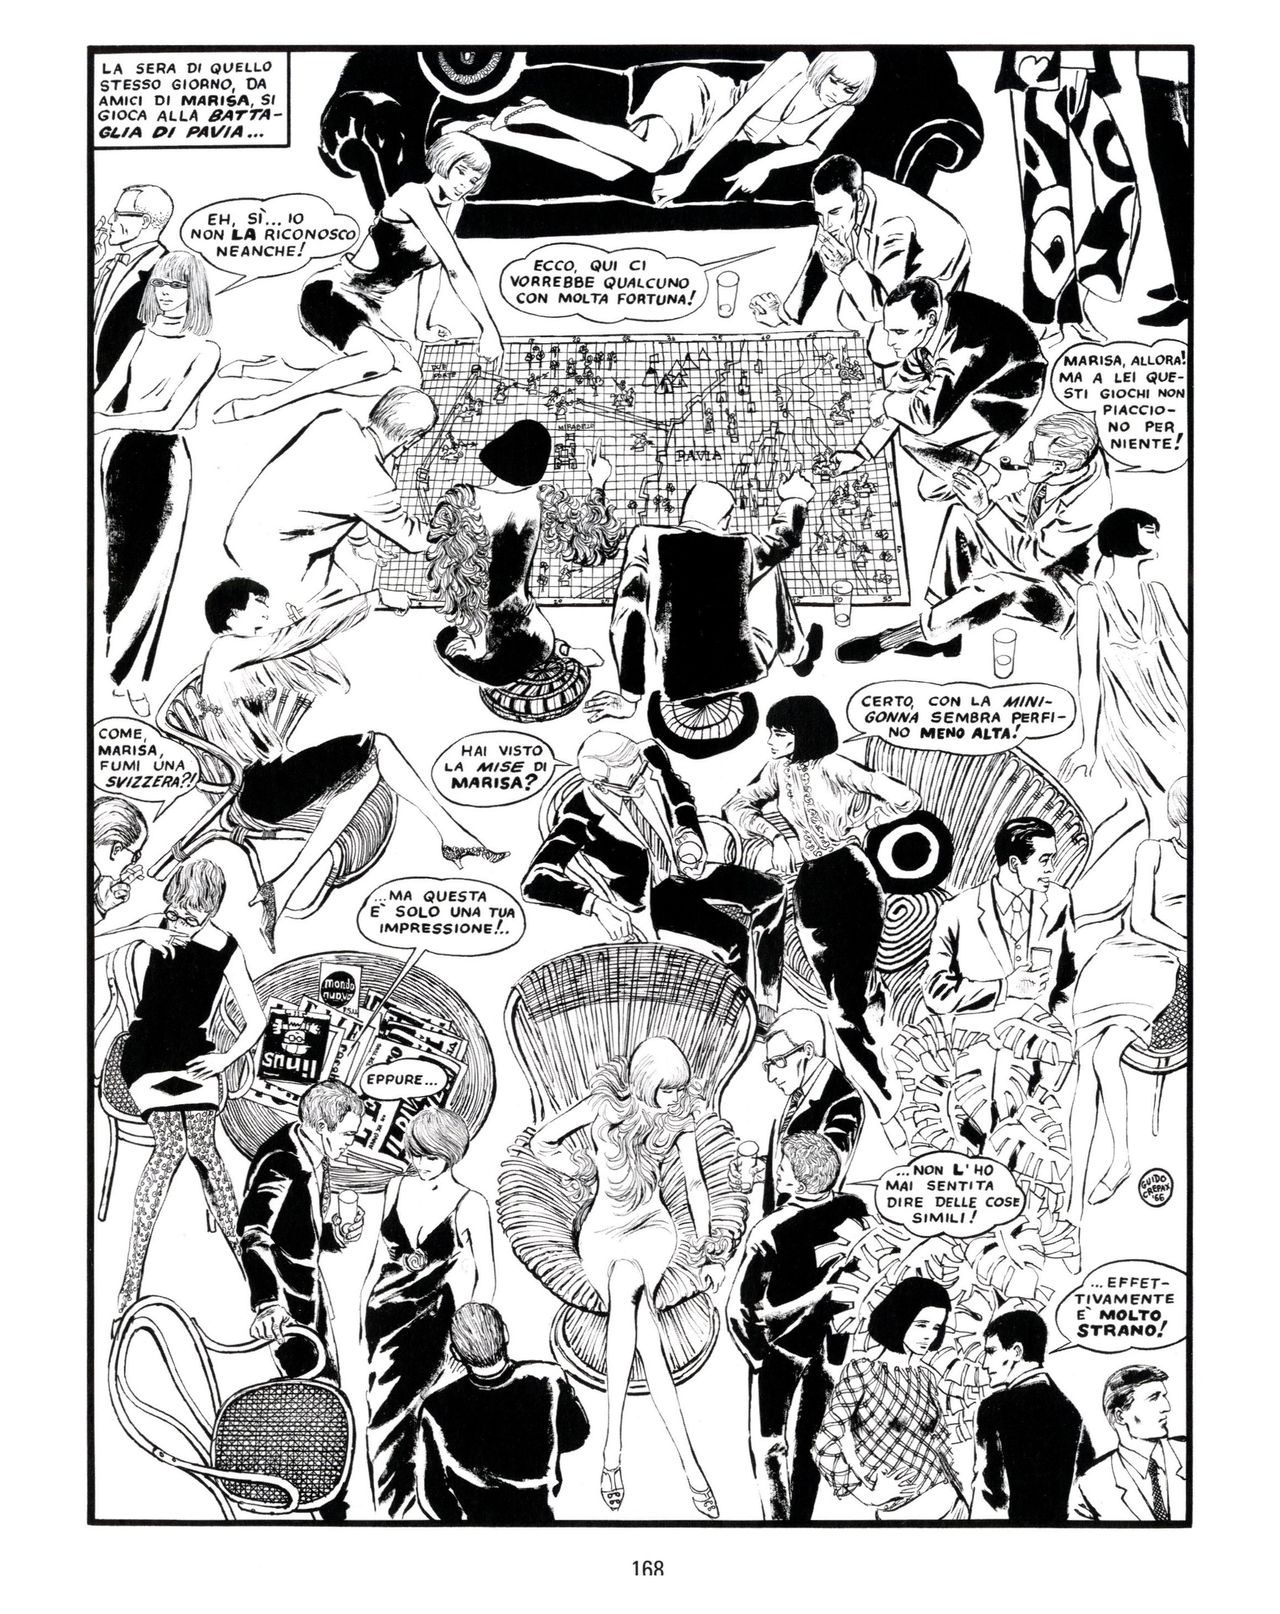 [Guido Crepax] Erotica Fumetti #25 : L'ascesa dei sotterranei : I cavalieri ciechi [Italian] 169